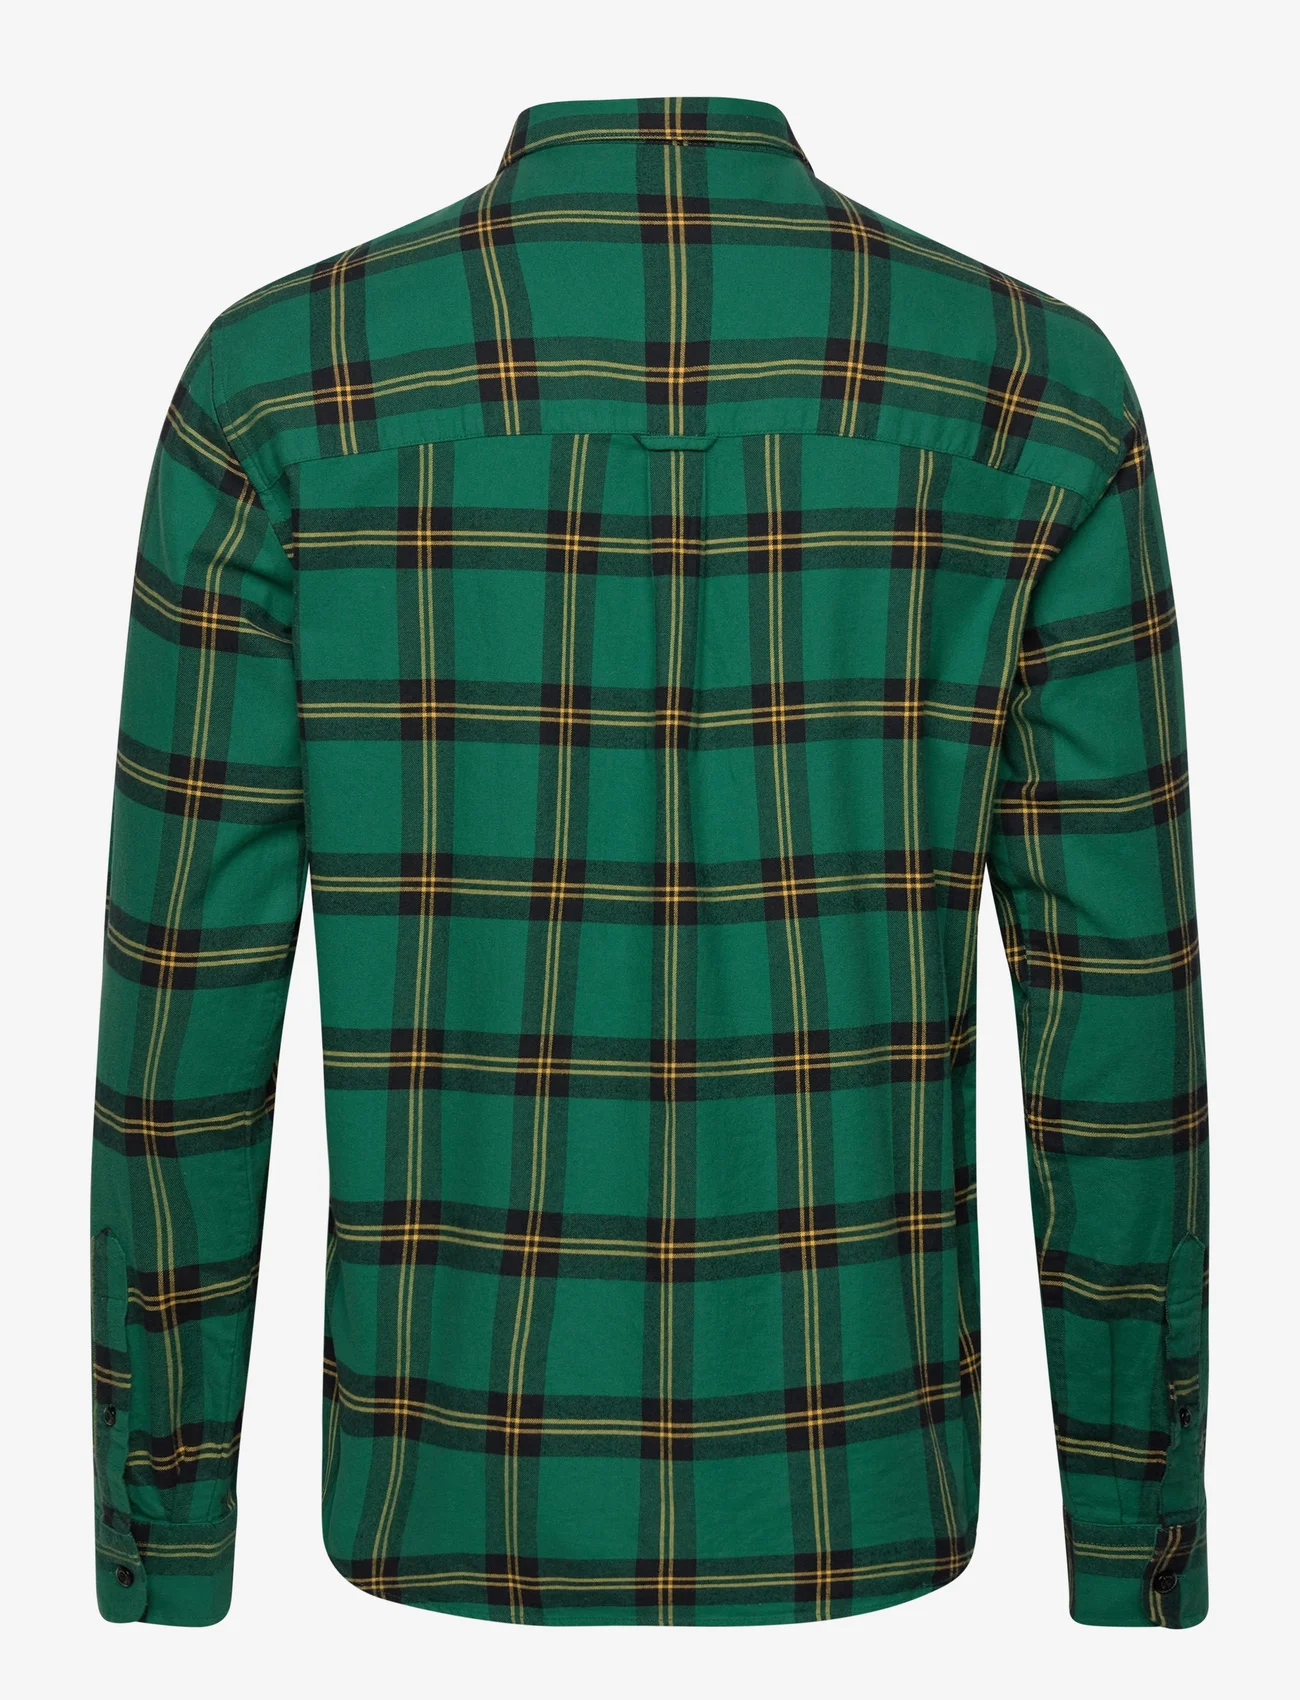 Peak Performance - M Moment Flannel Shirt - geruite overhemden - 209 check - 1